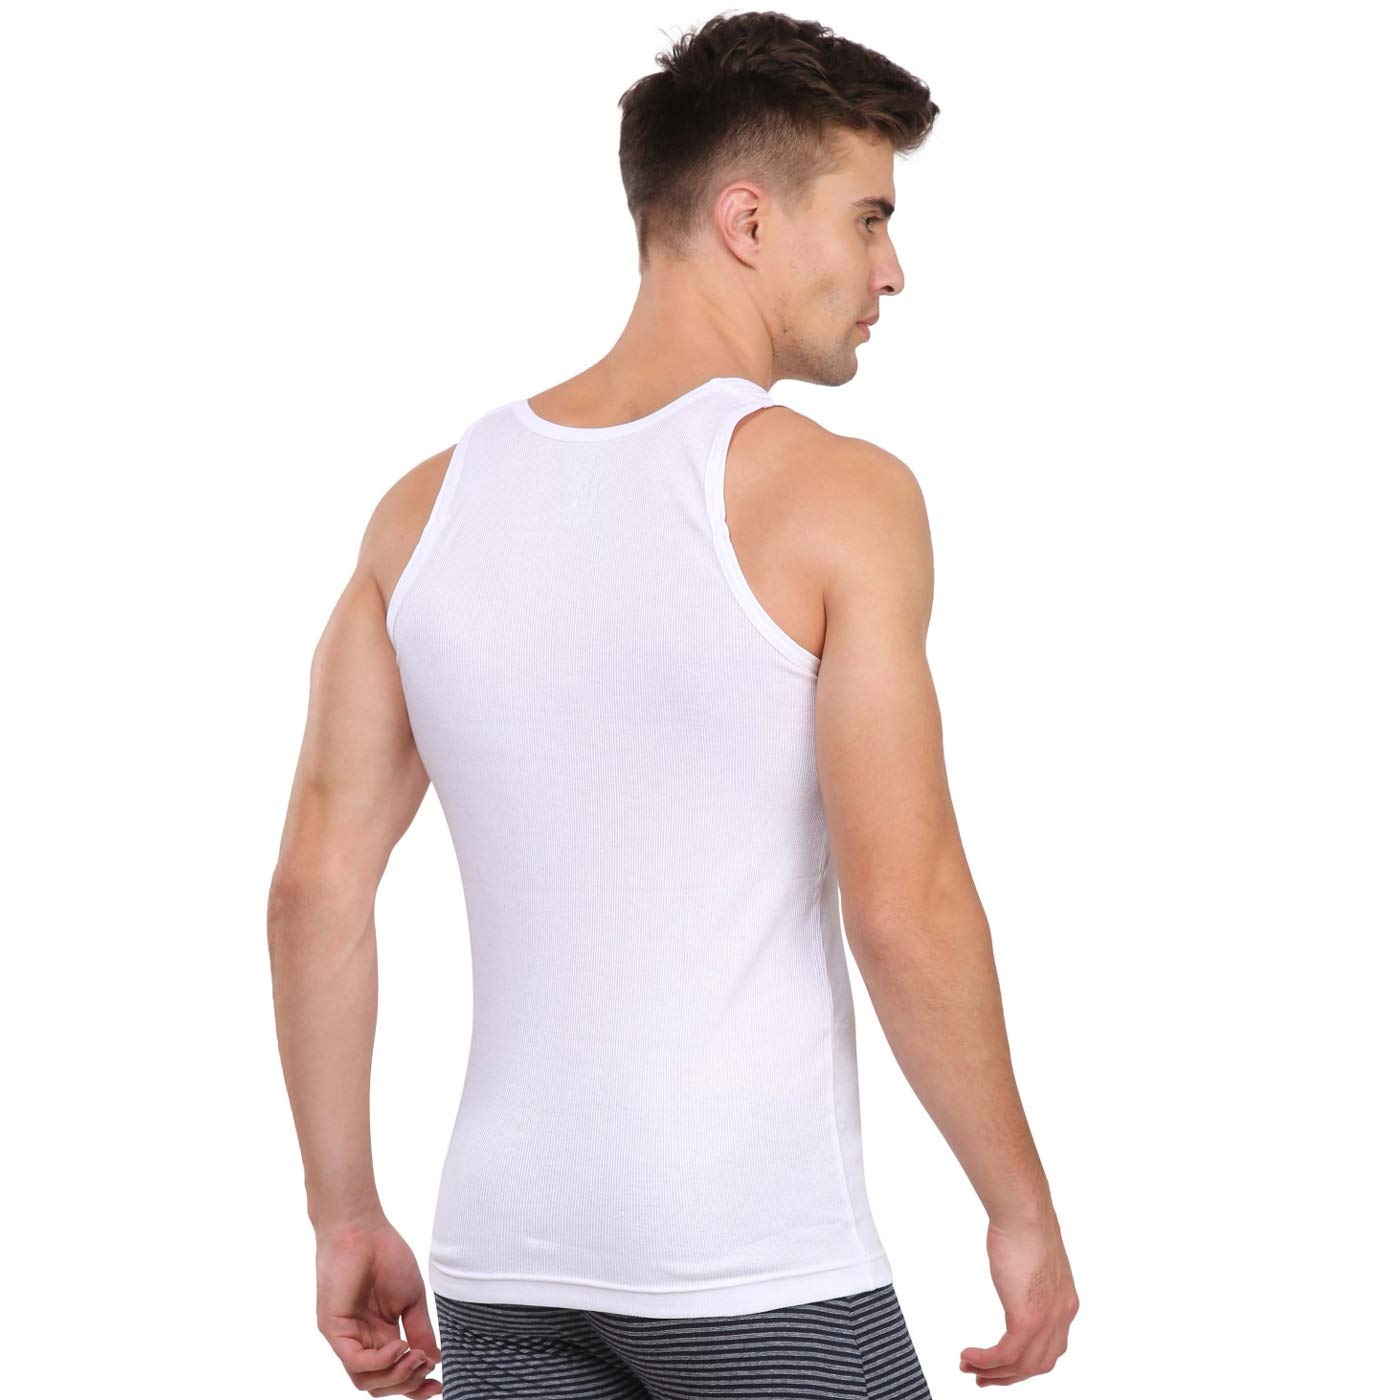 Jockey Men White Round Neck Sleeveless Plain/Solid Undershirt/Vest - Pack of 1